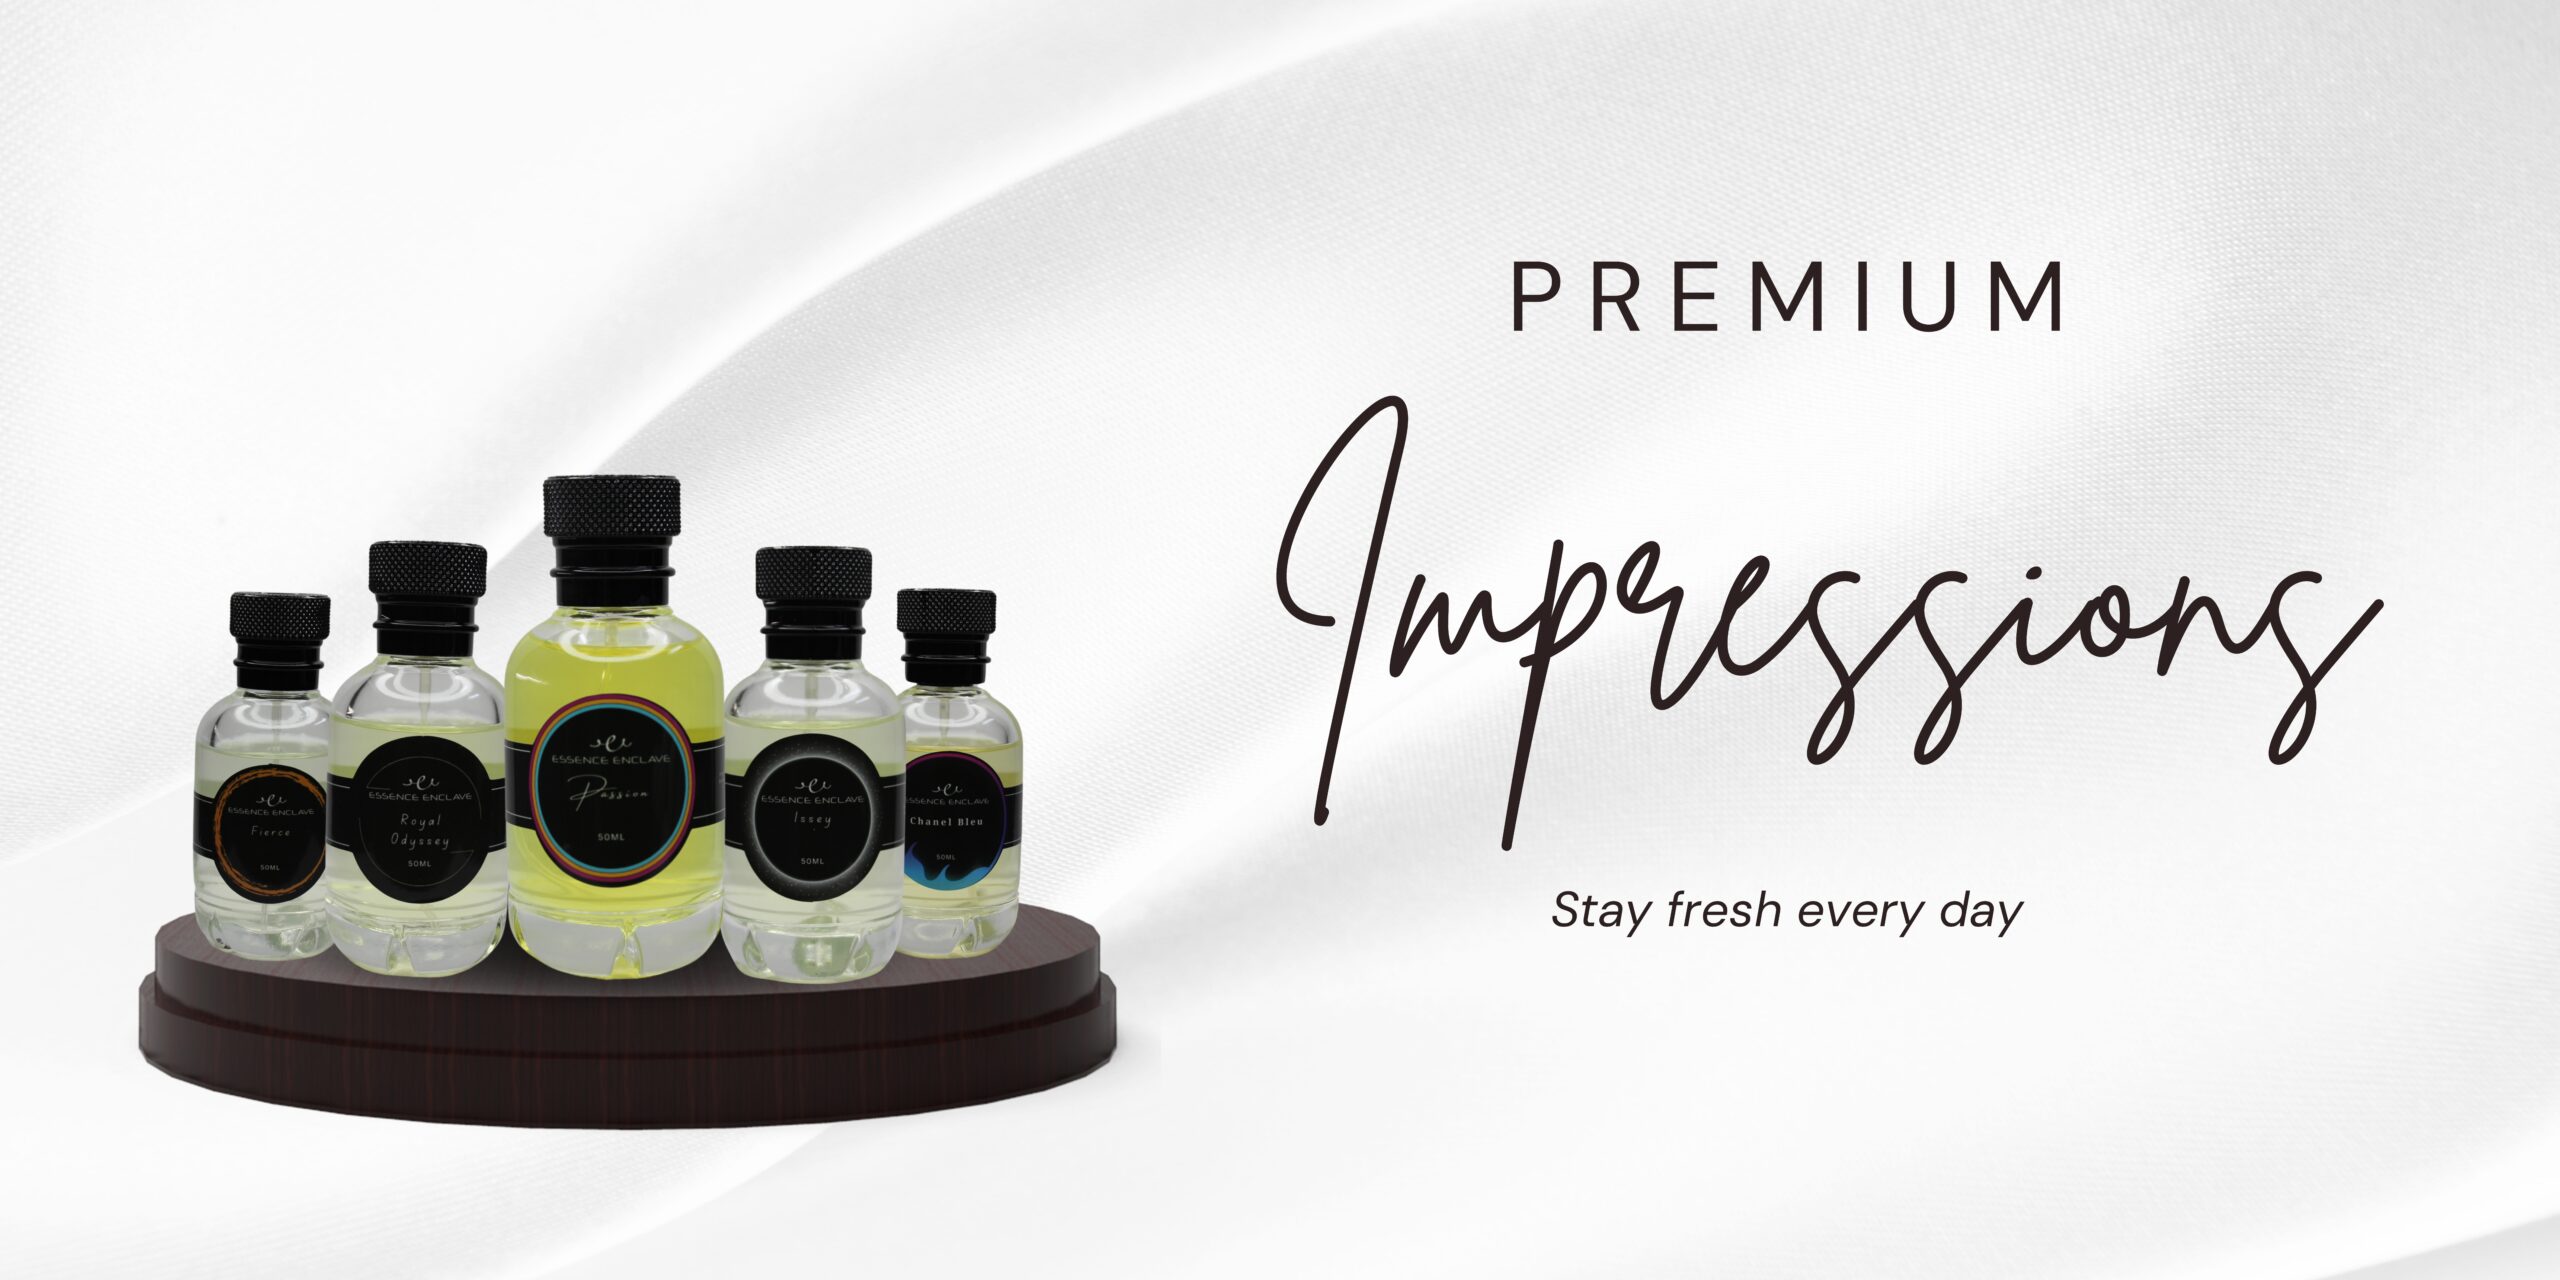 Essence Enclave Cover photo premium perfumes